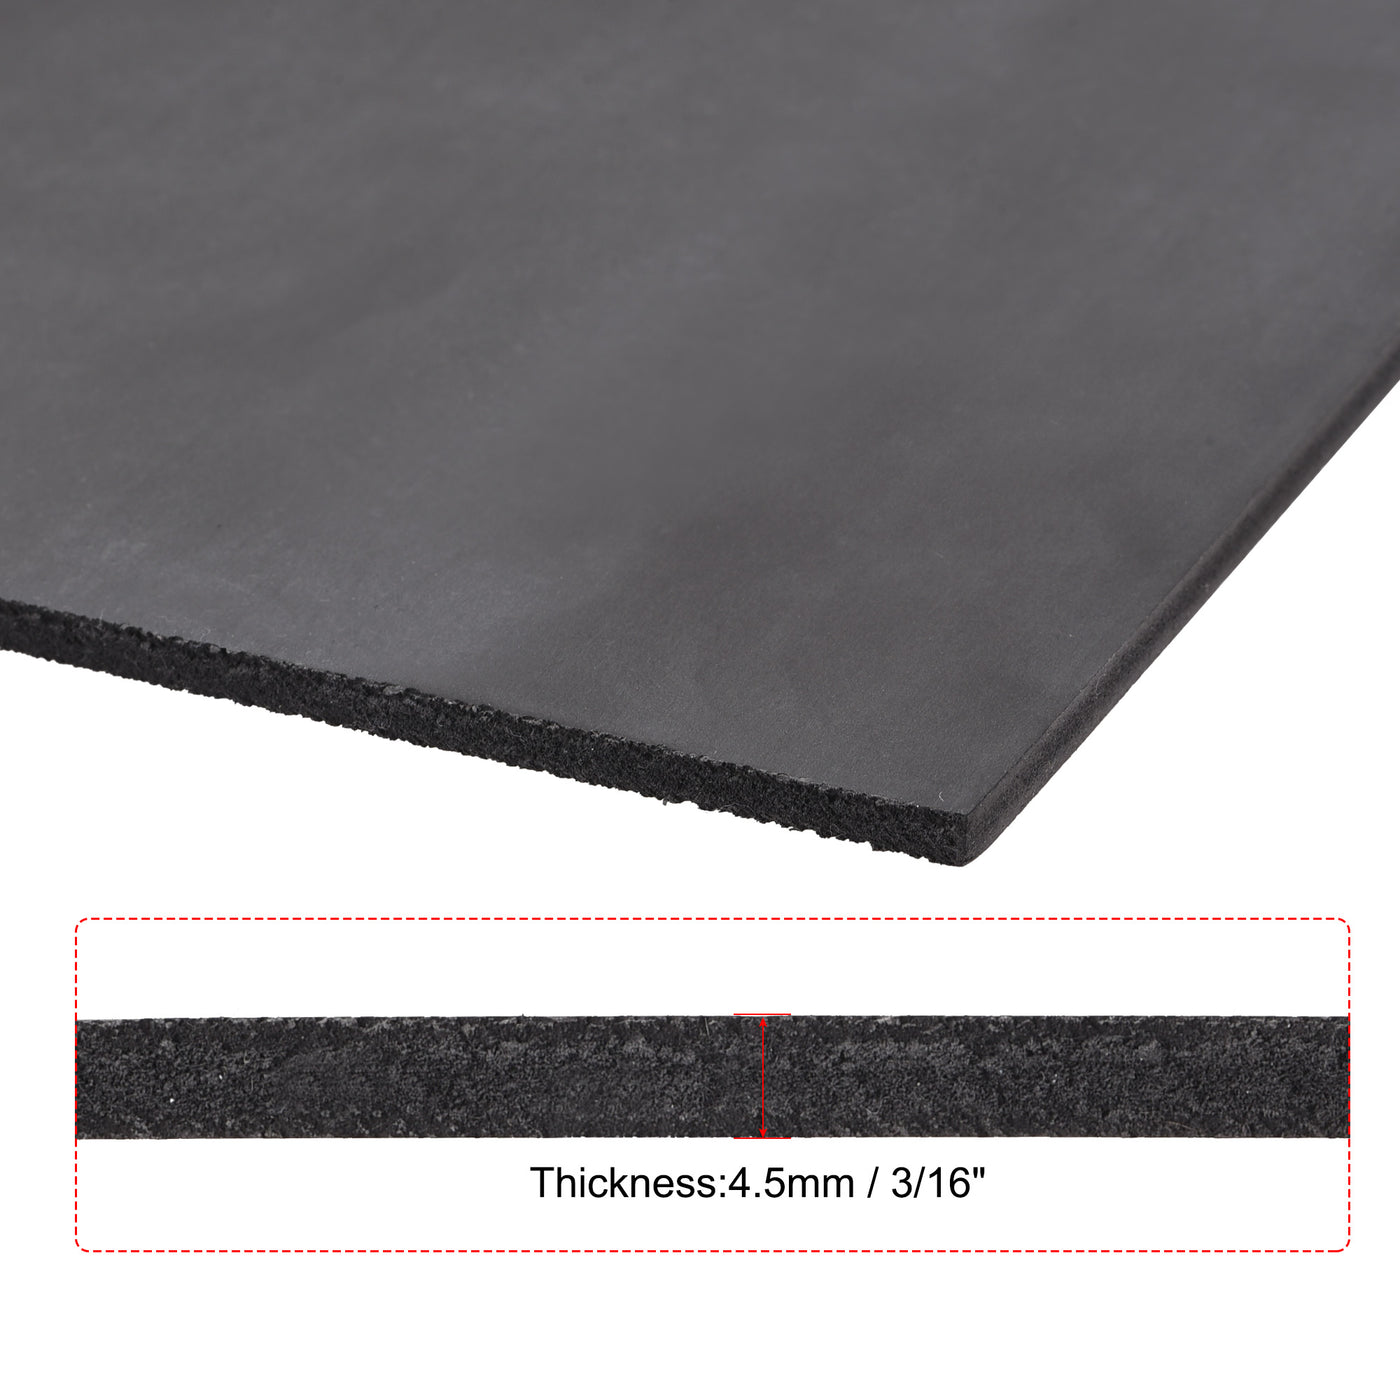 uxcell Uxcell PVC Foam Board Sheet,4.5mm x 300mm x 600mm,Black,Double Sided,2pcs